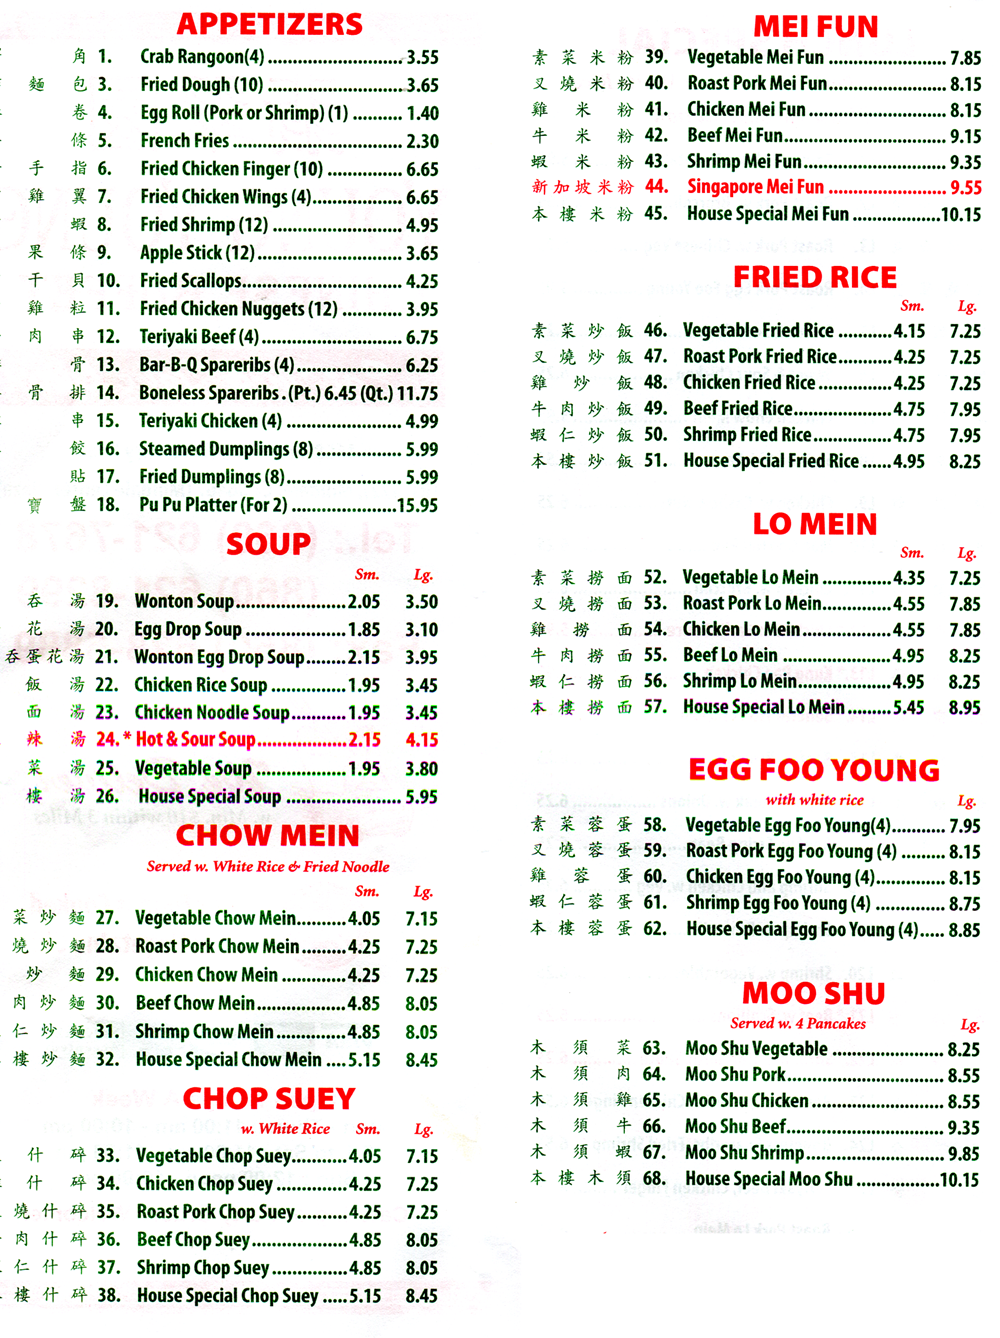 Appetizers, mei fun, fried rice, soup, lo mein, chow mein, egg foo young, chop suey and moo shu on Young Young's takeout menu